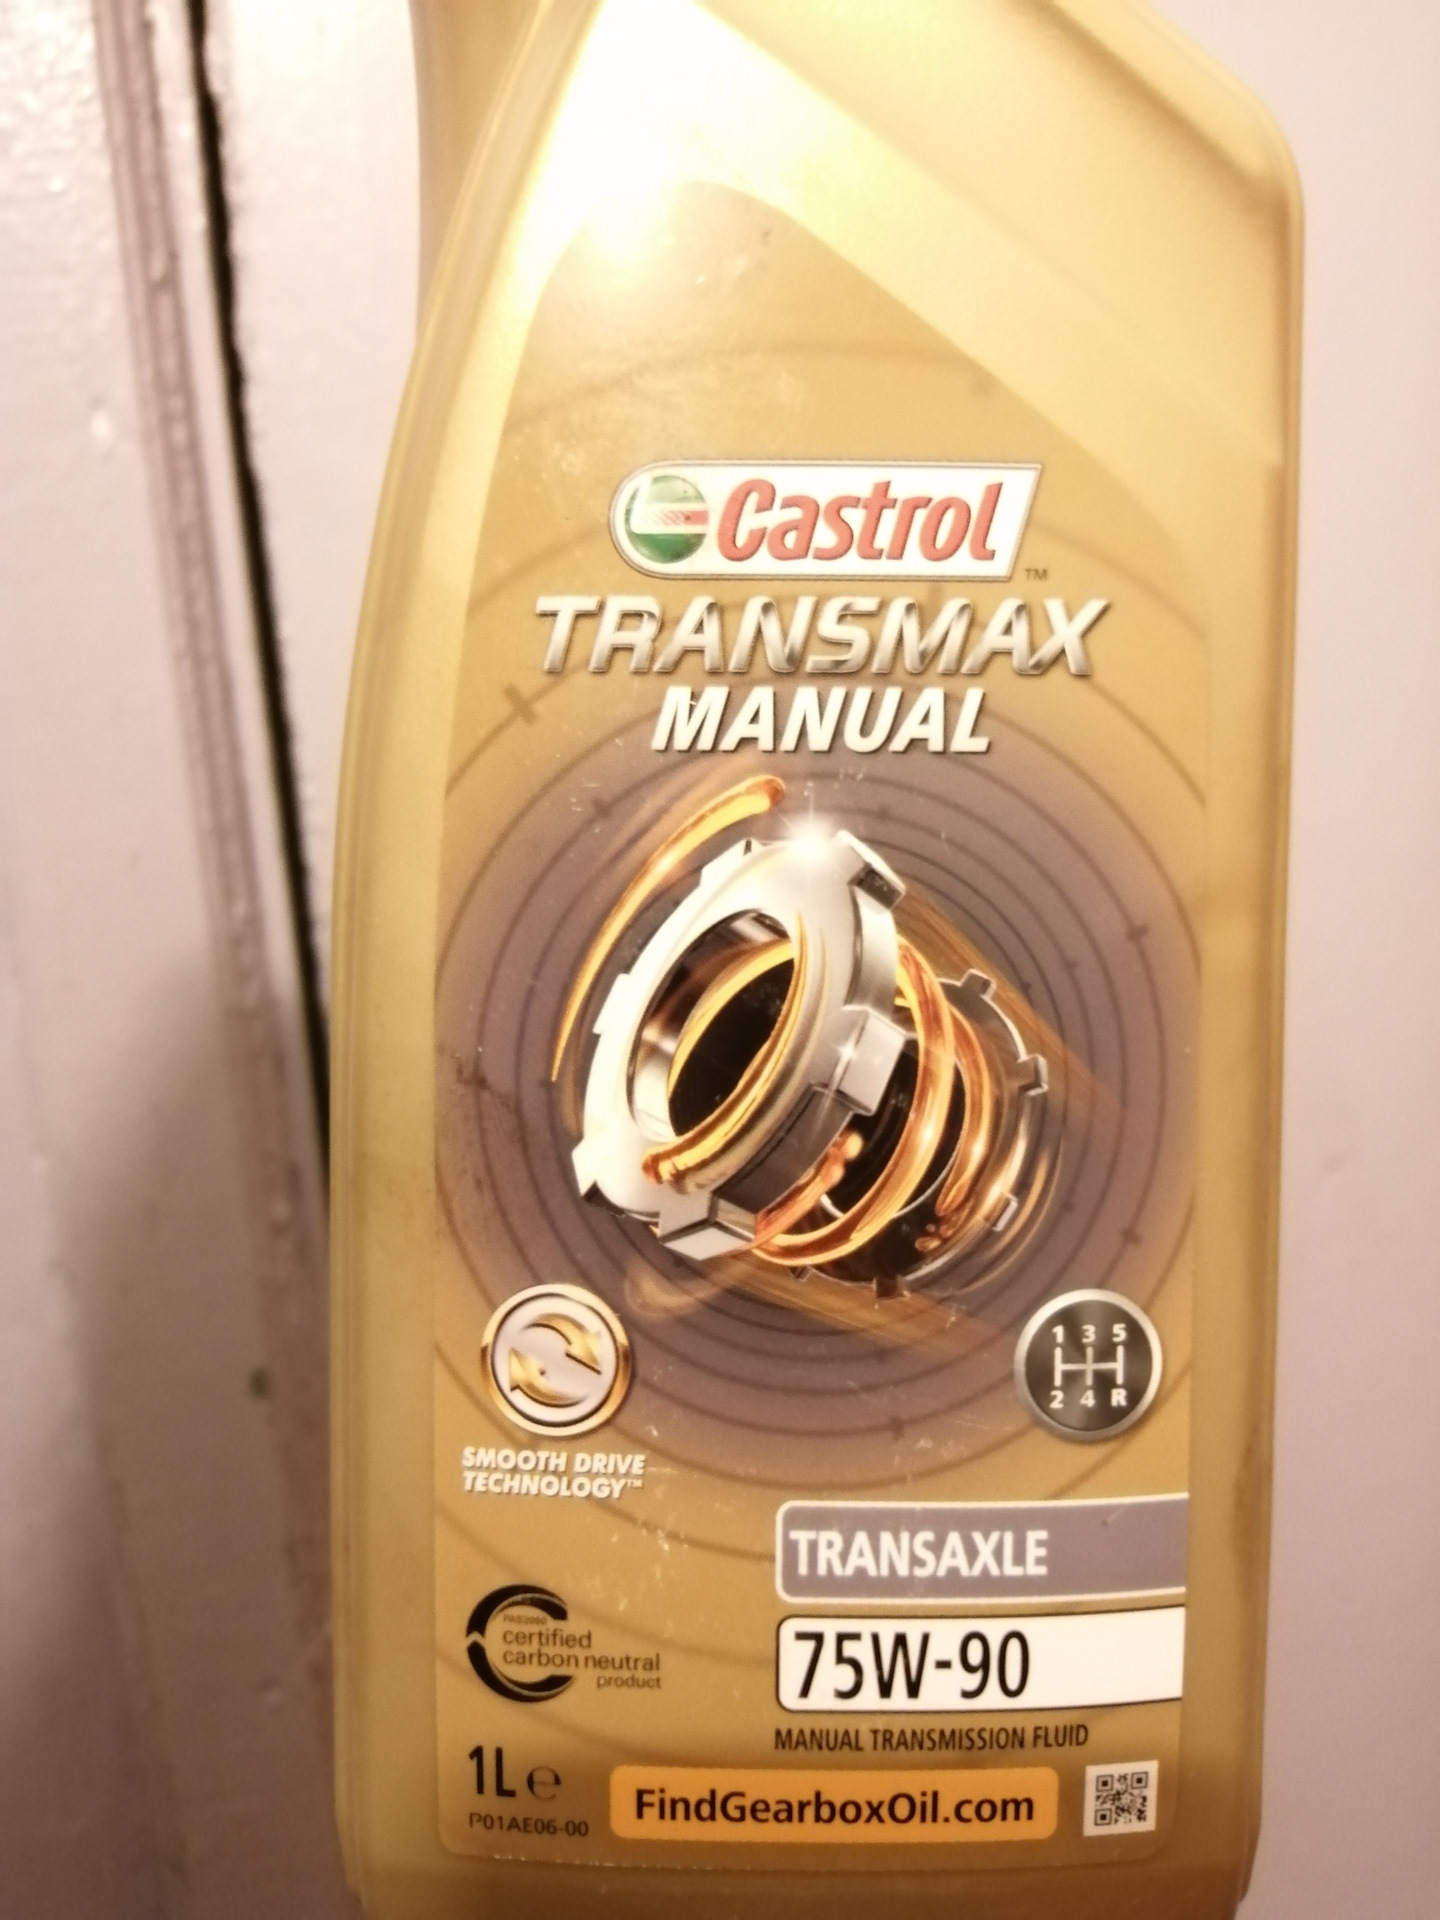 Castrol transmax manual 75w 90